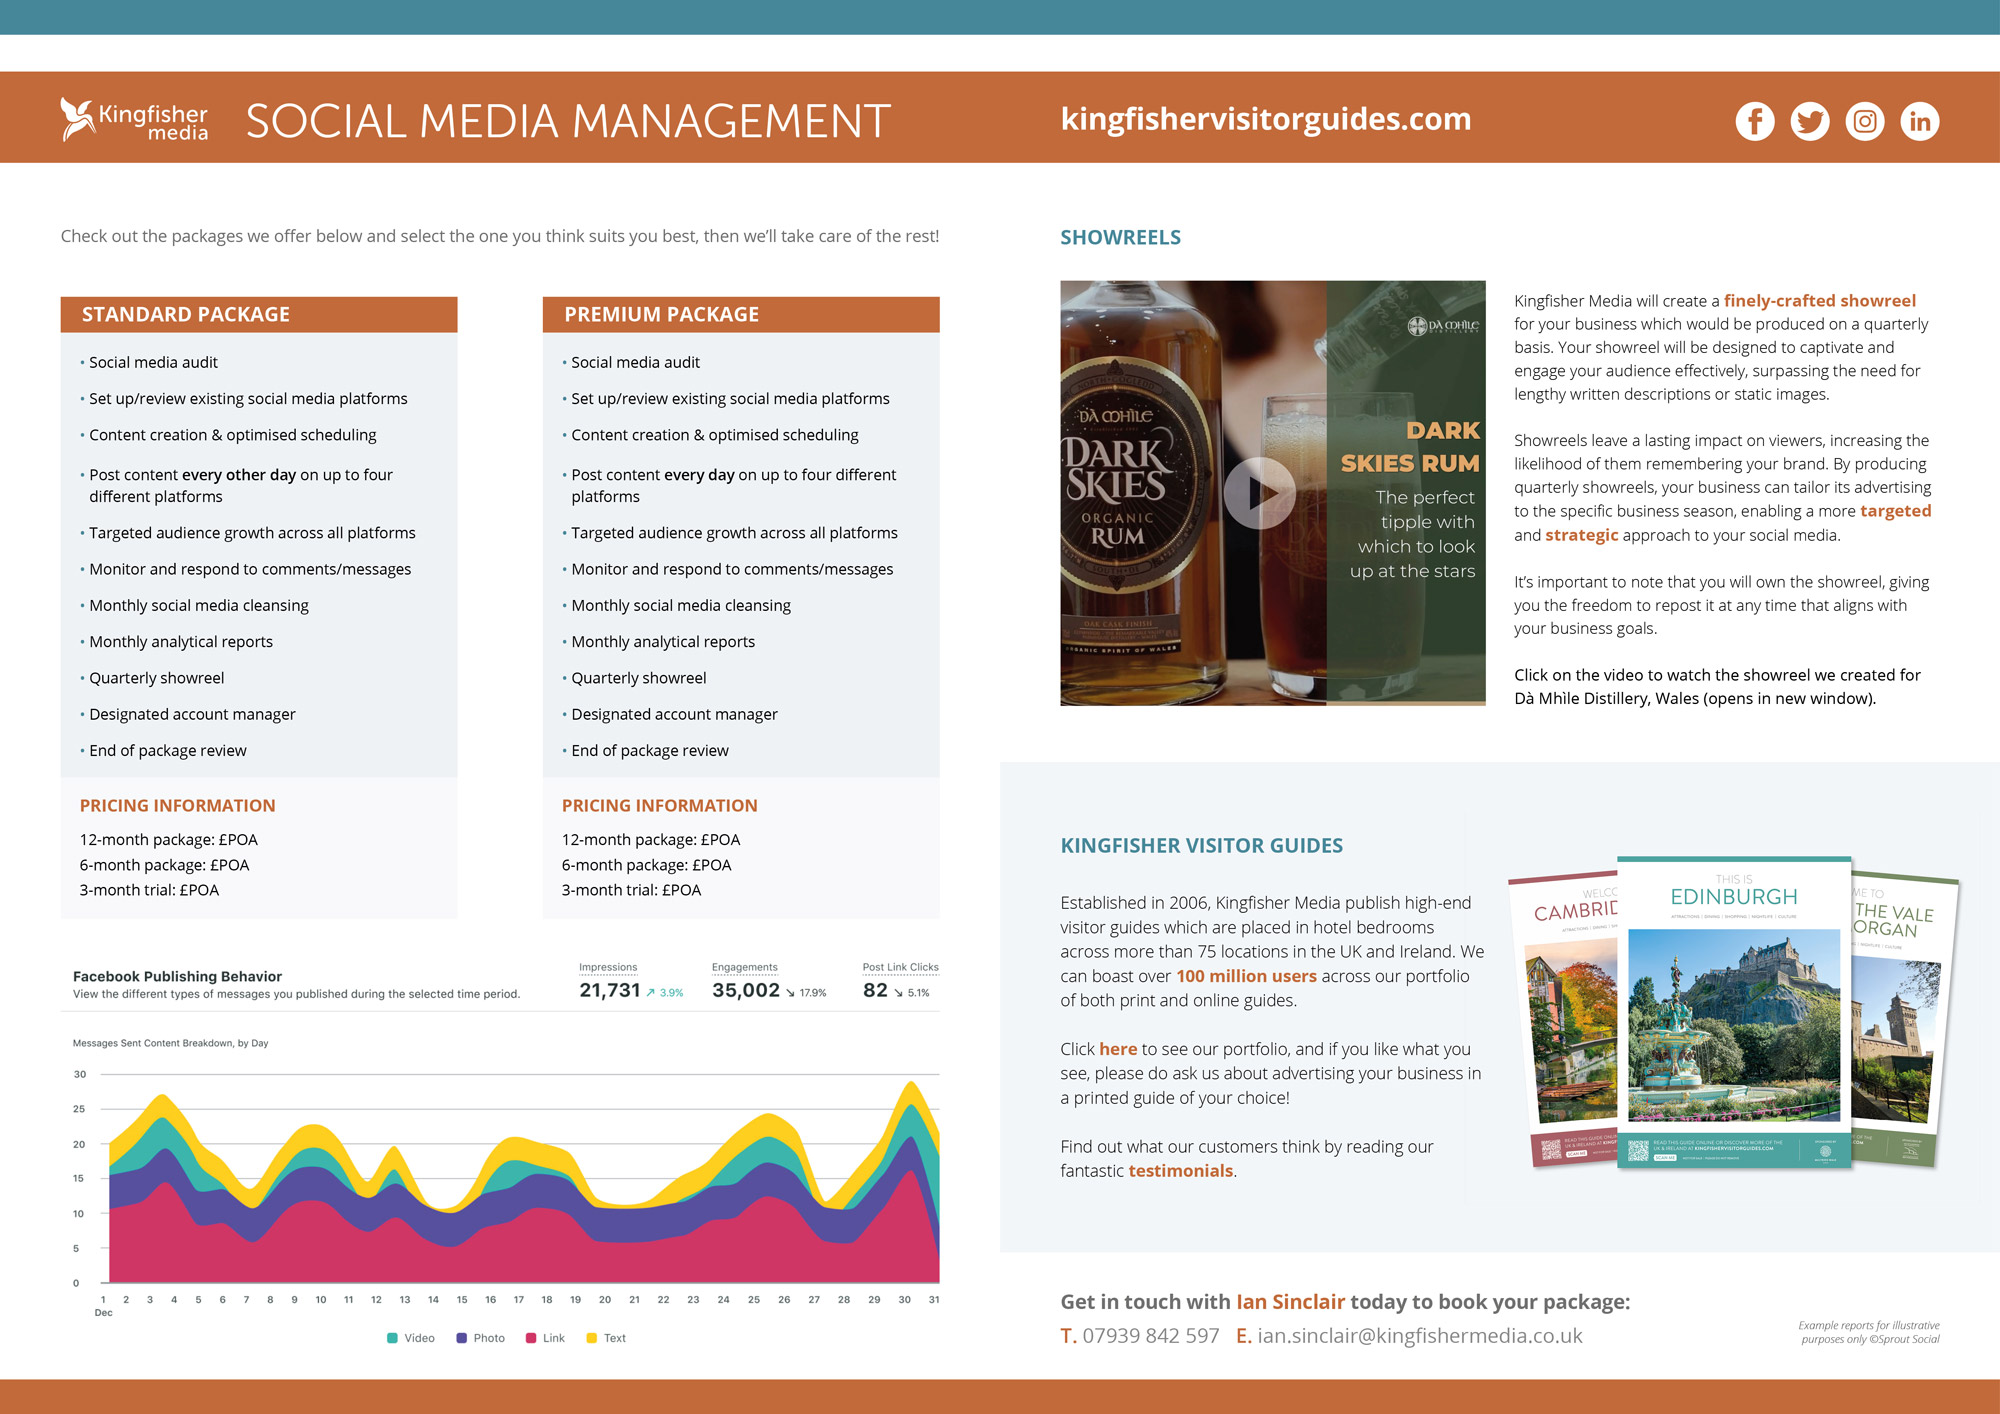 Kingfisher Media Social Media Management media pack